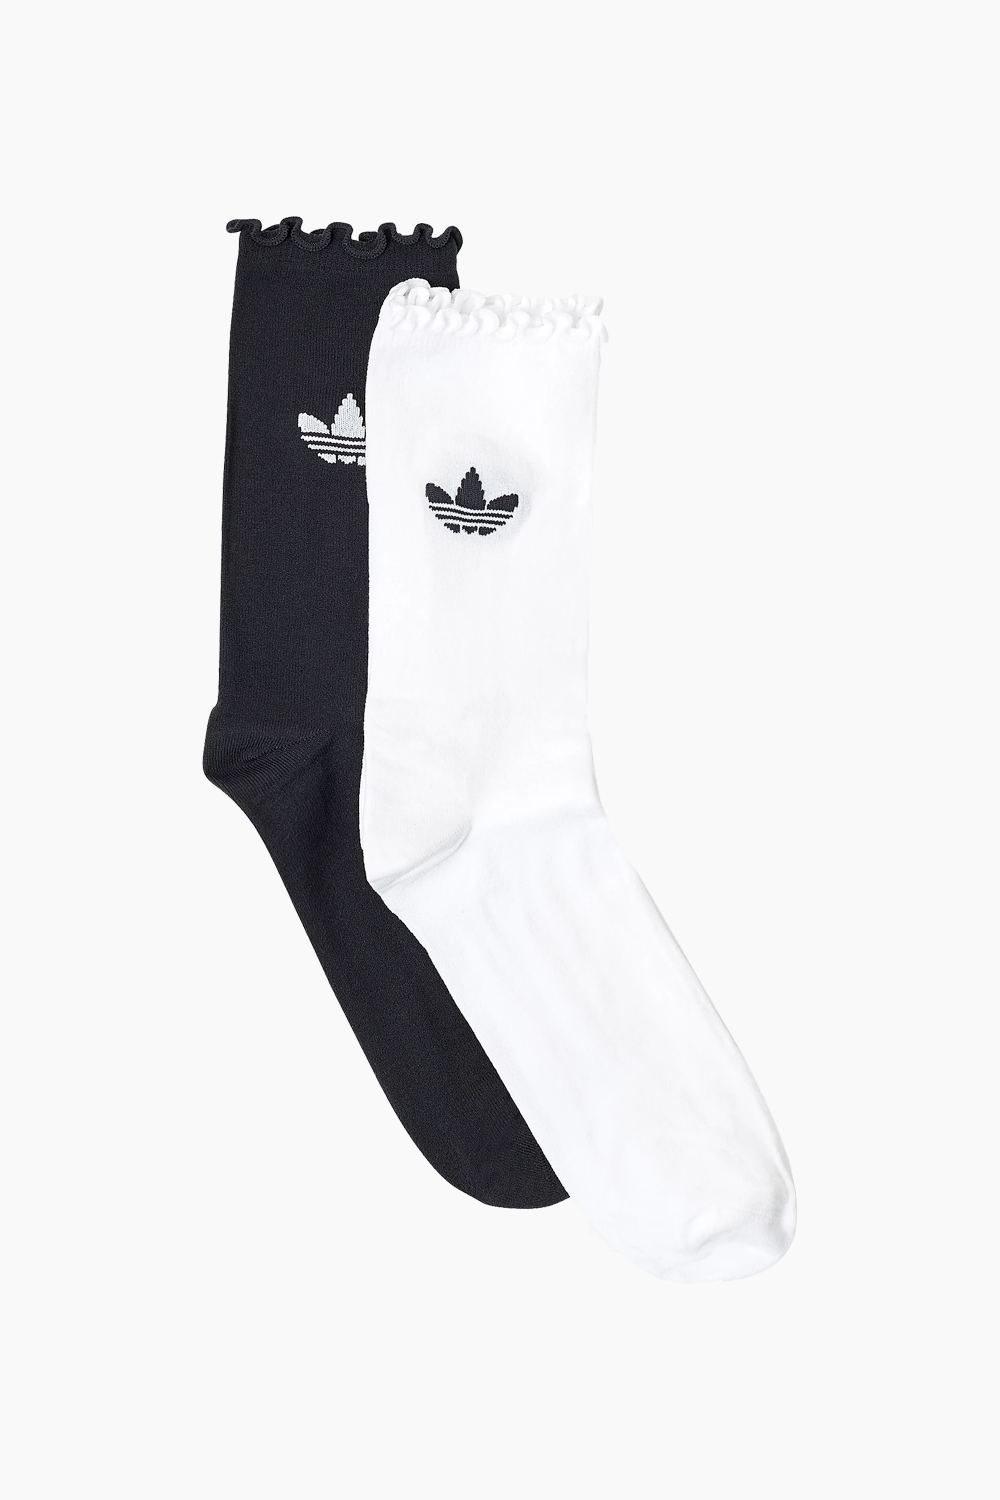 Ruffle Crw 2PP Socks - White/Black - Adidas Originals